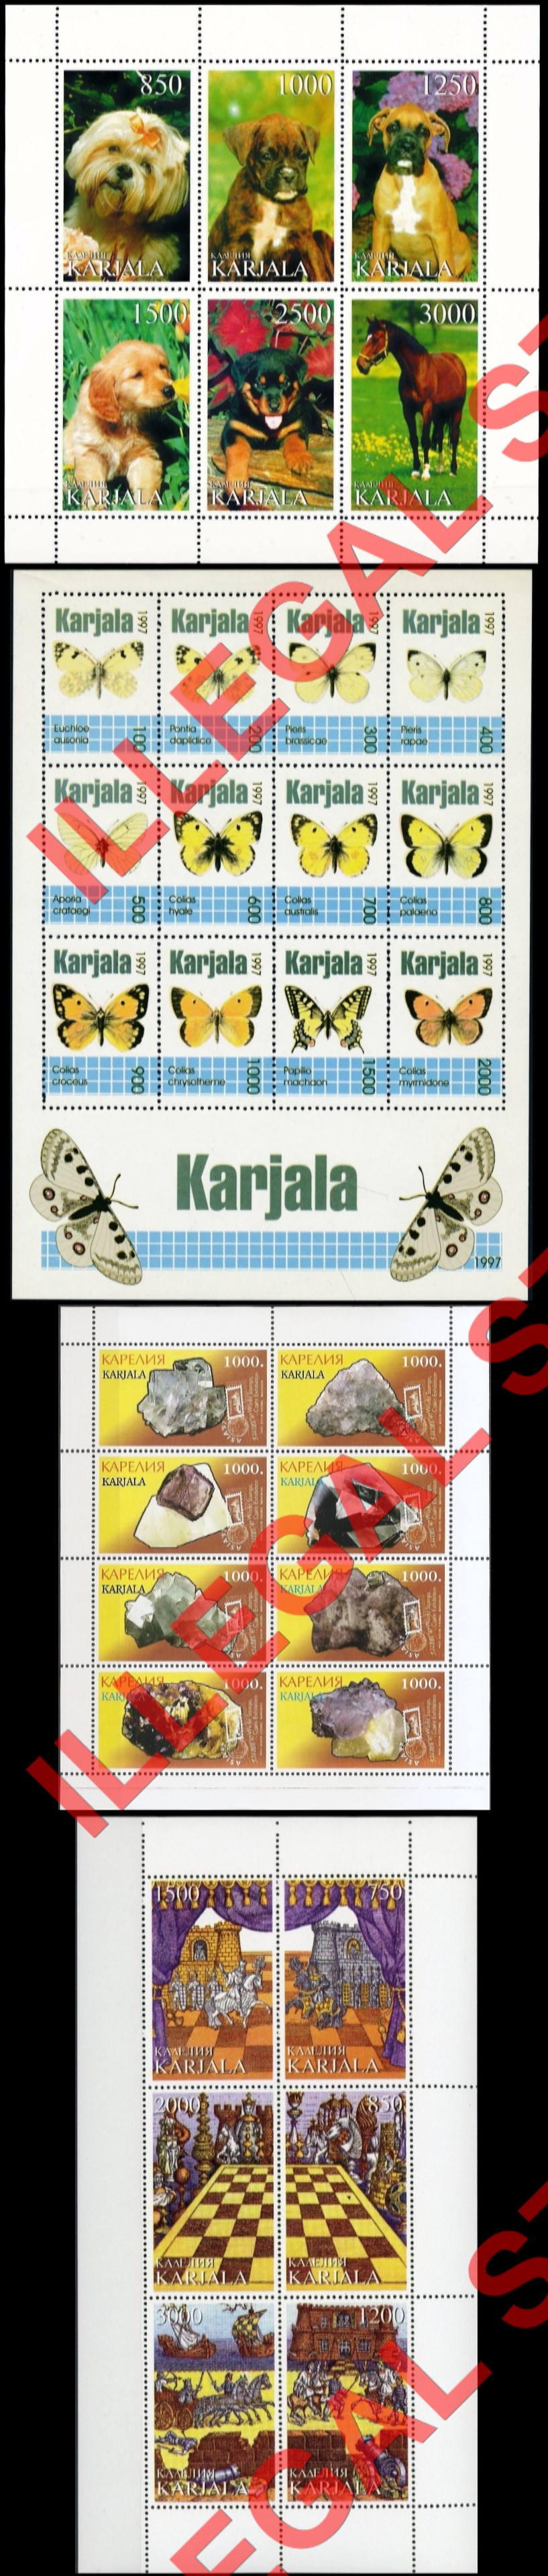 Karjala 1997 Illegal Stamps (Part 2)